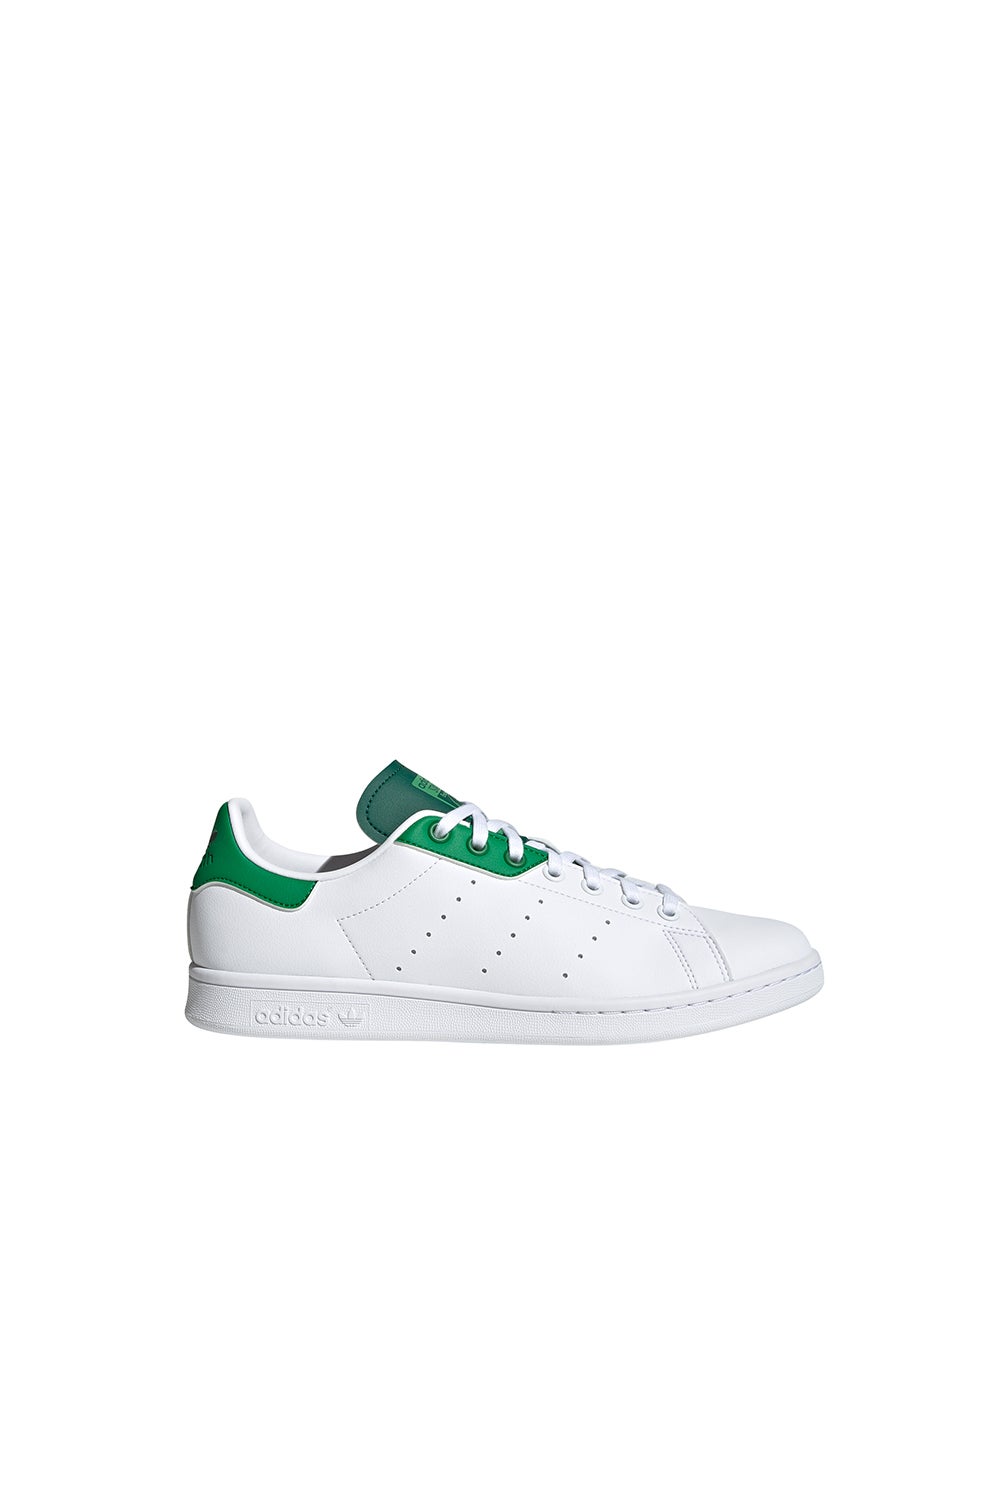 adidas Stan Smith Cloud White/Green/Collegiate Green